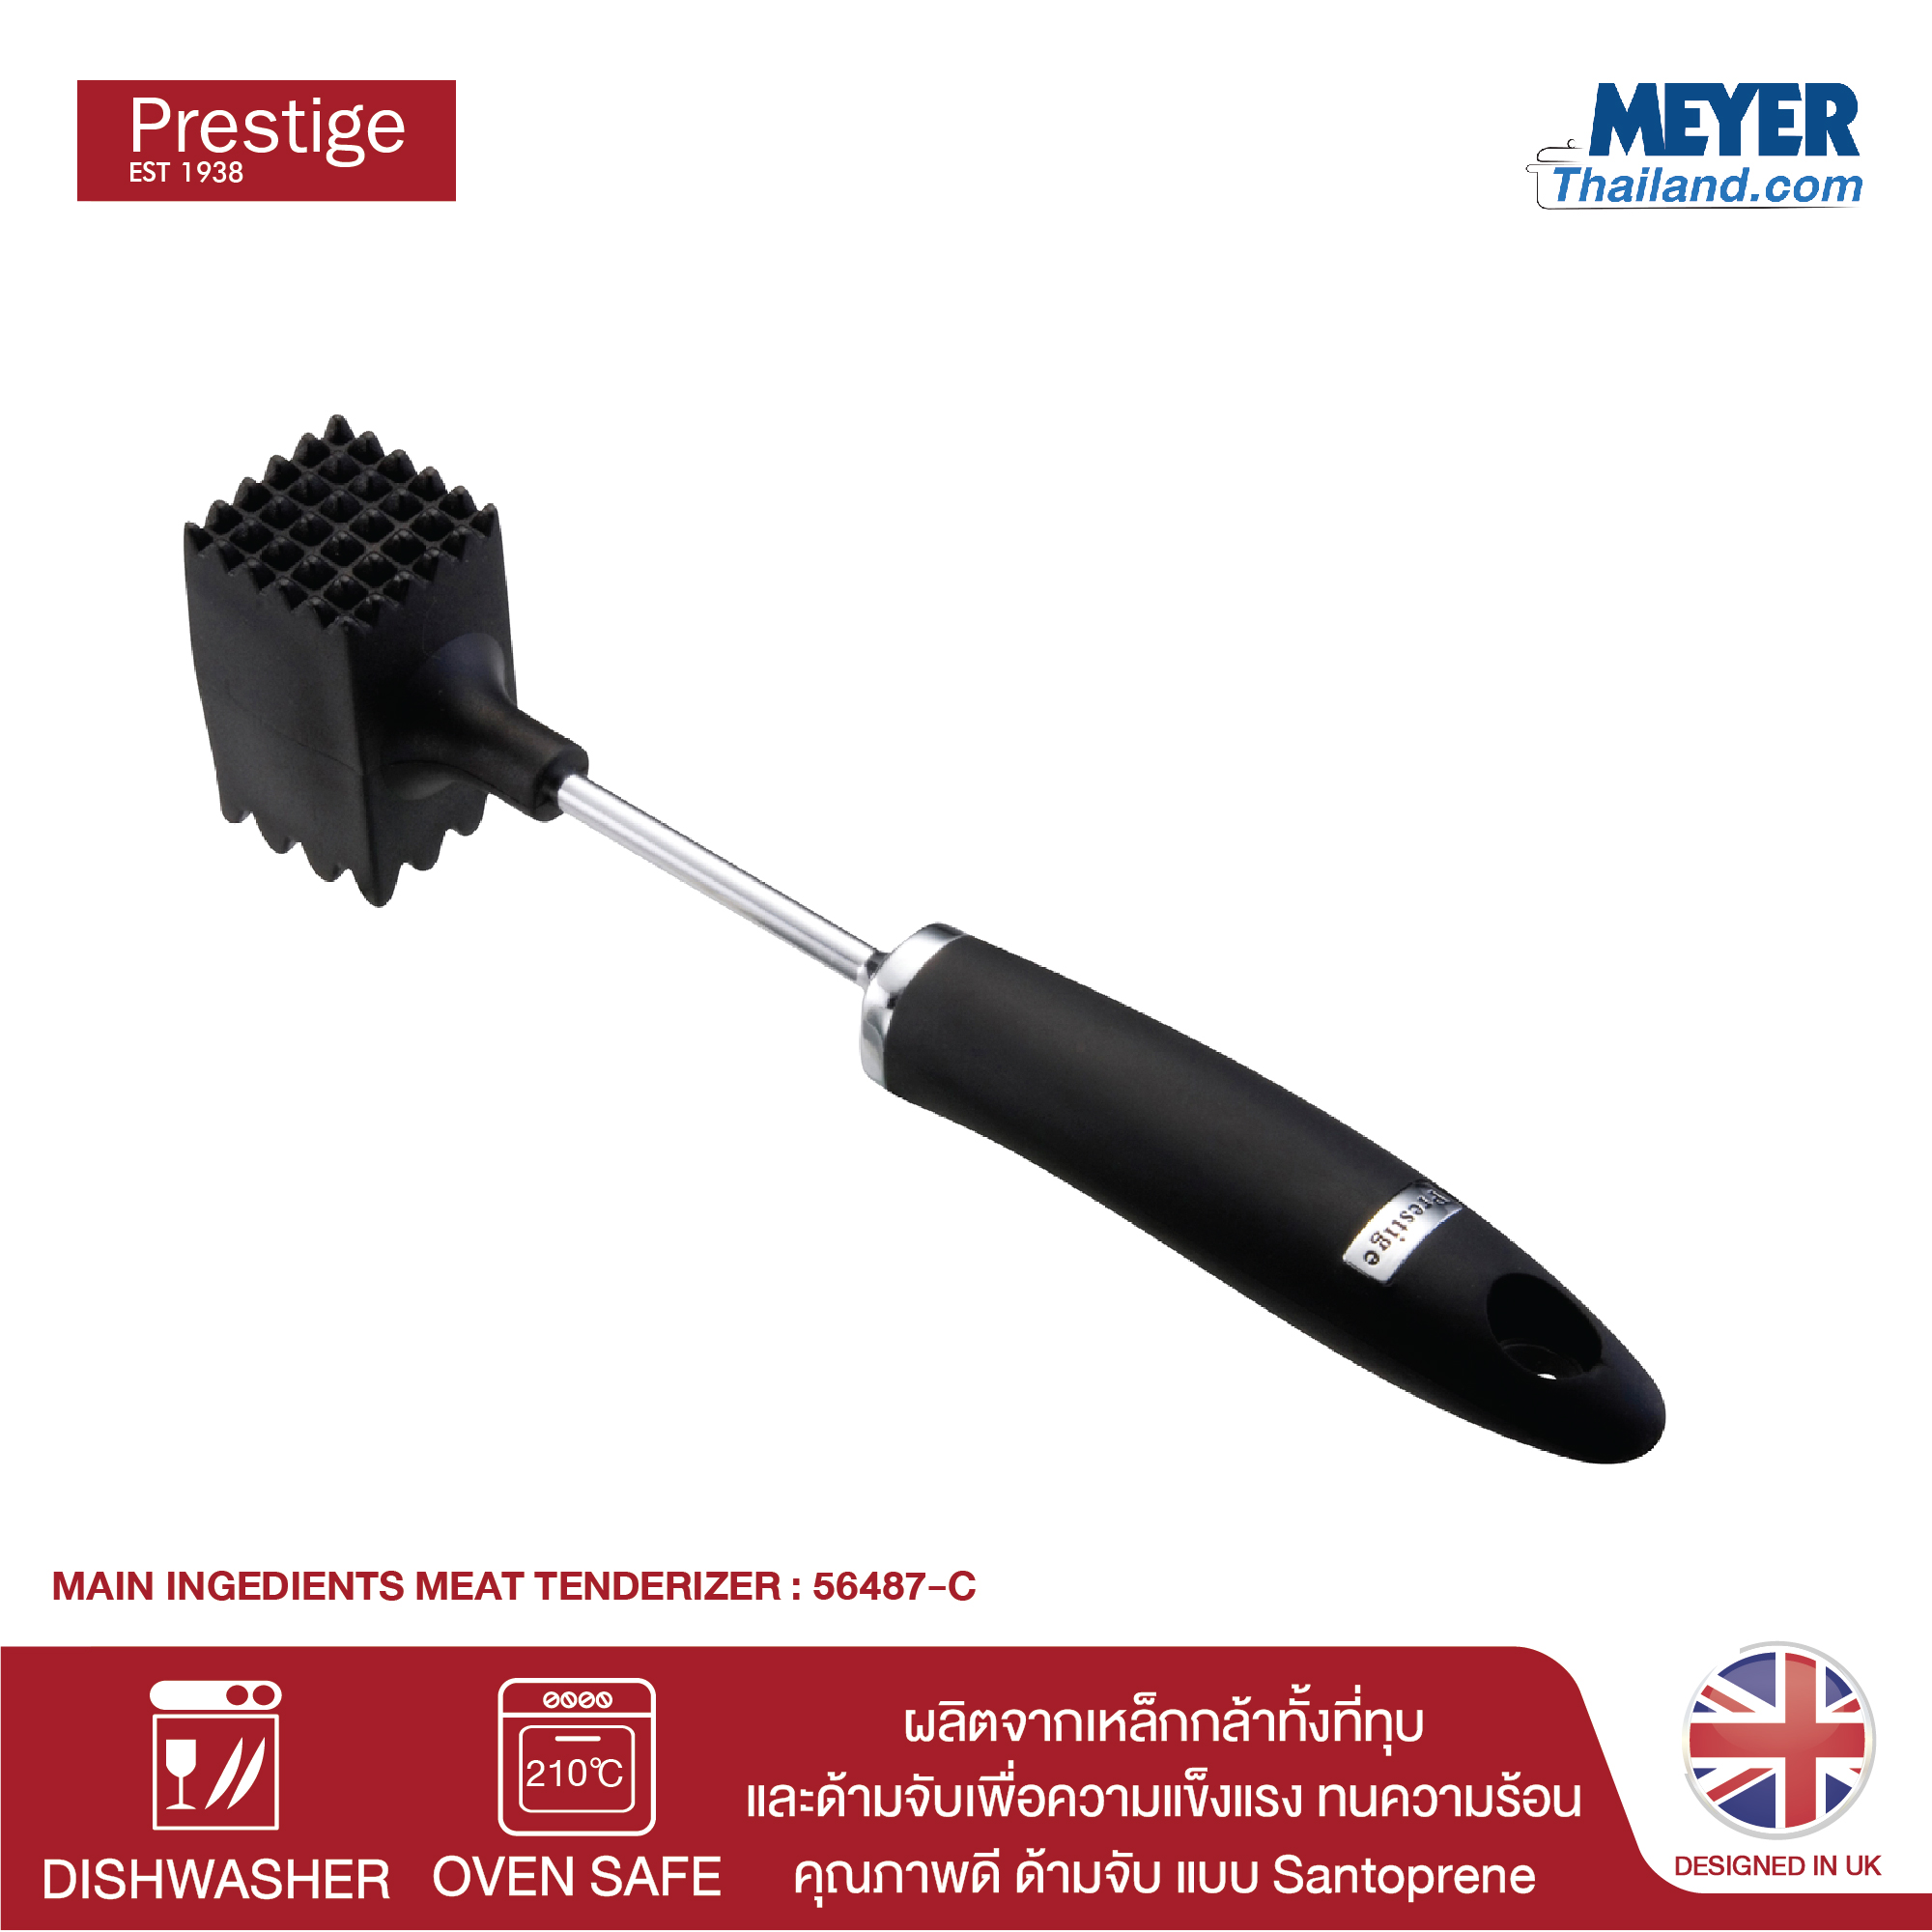 Meyer Prestige Meat Tenderiser Model 56487-C